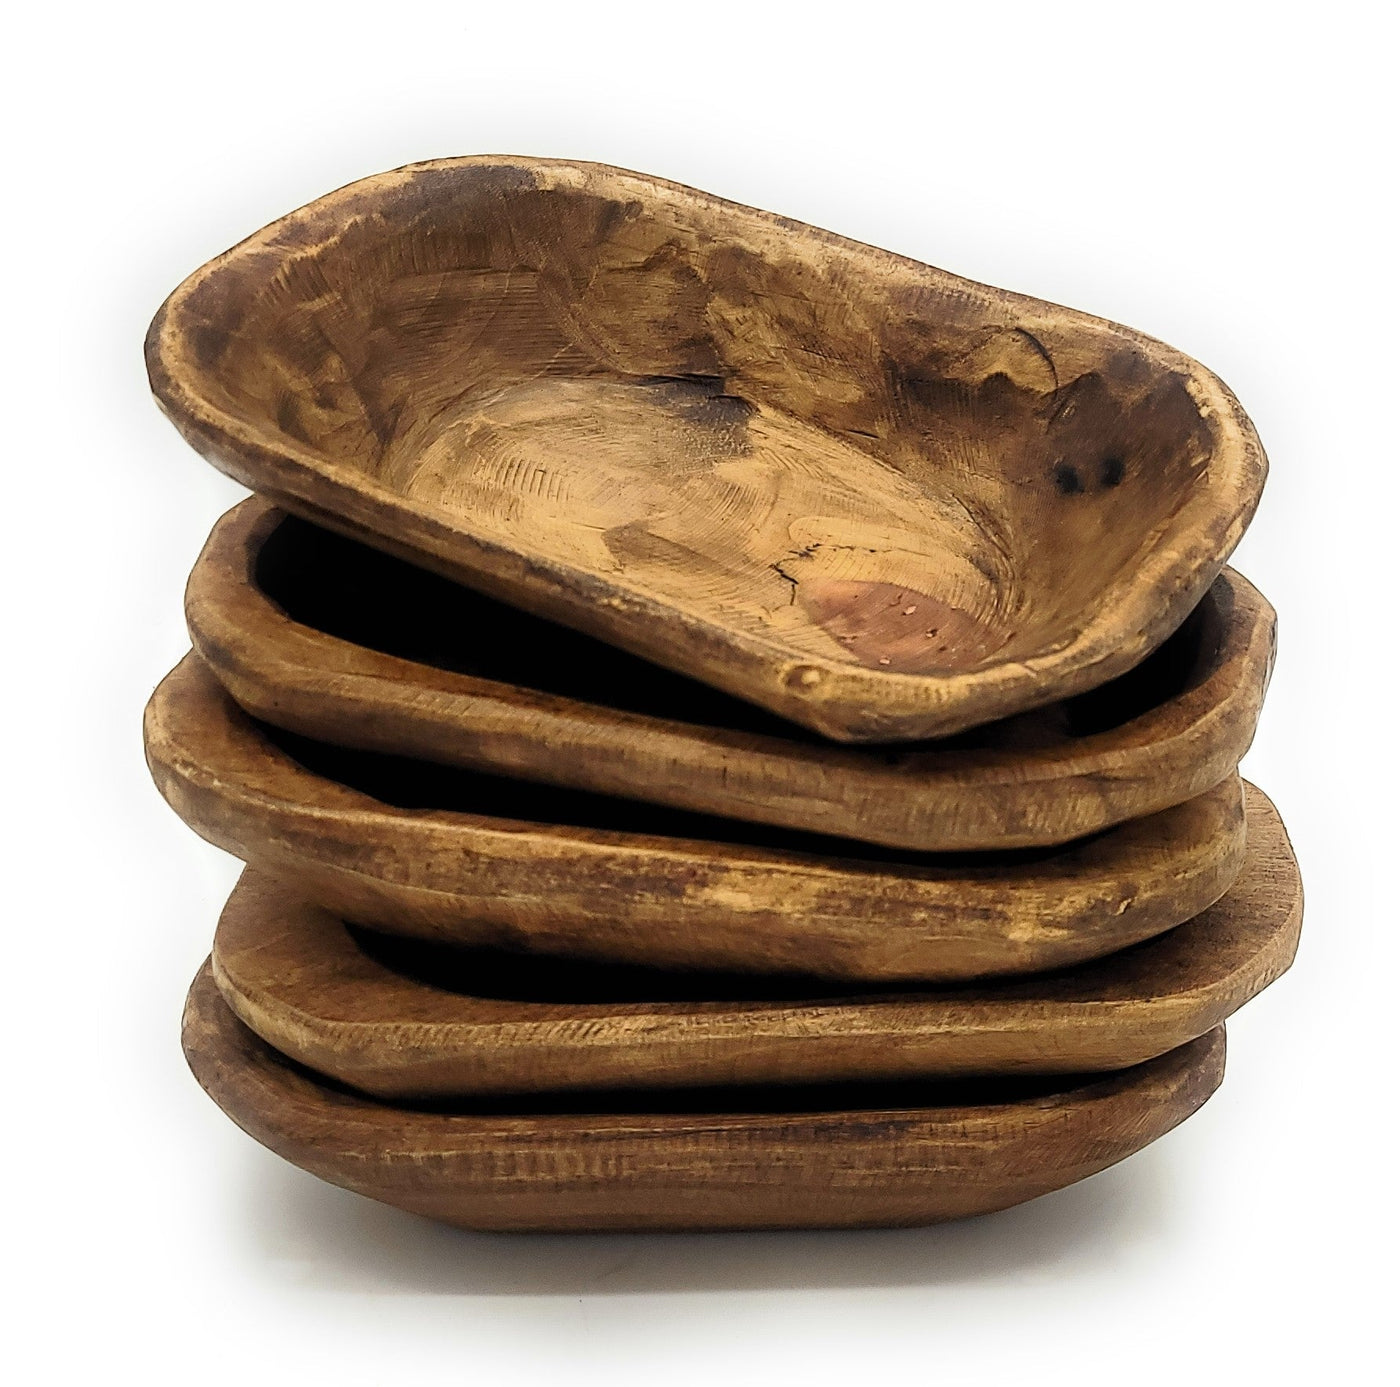 Small Wood Dough Bowl - 9 x 6